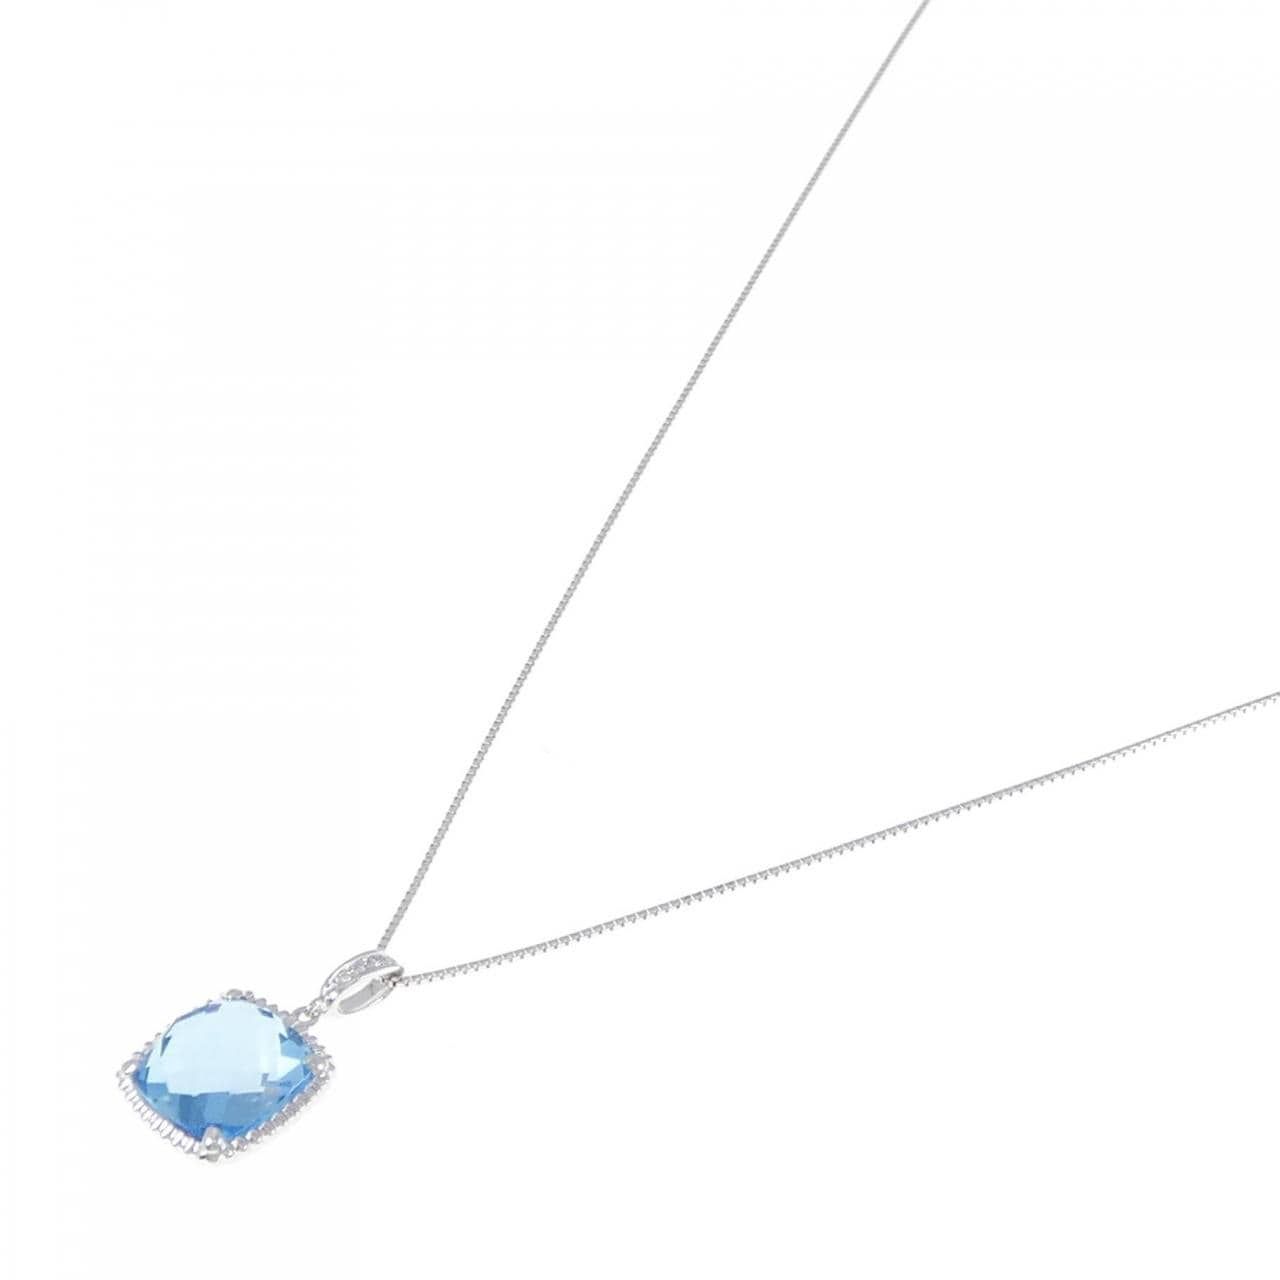 K18WG blue Topaz necklace 6.47CT